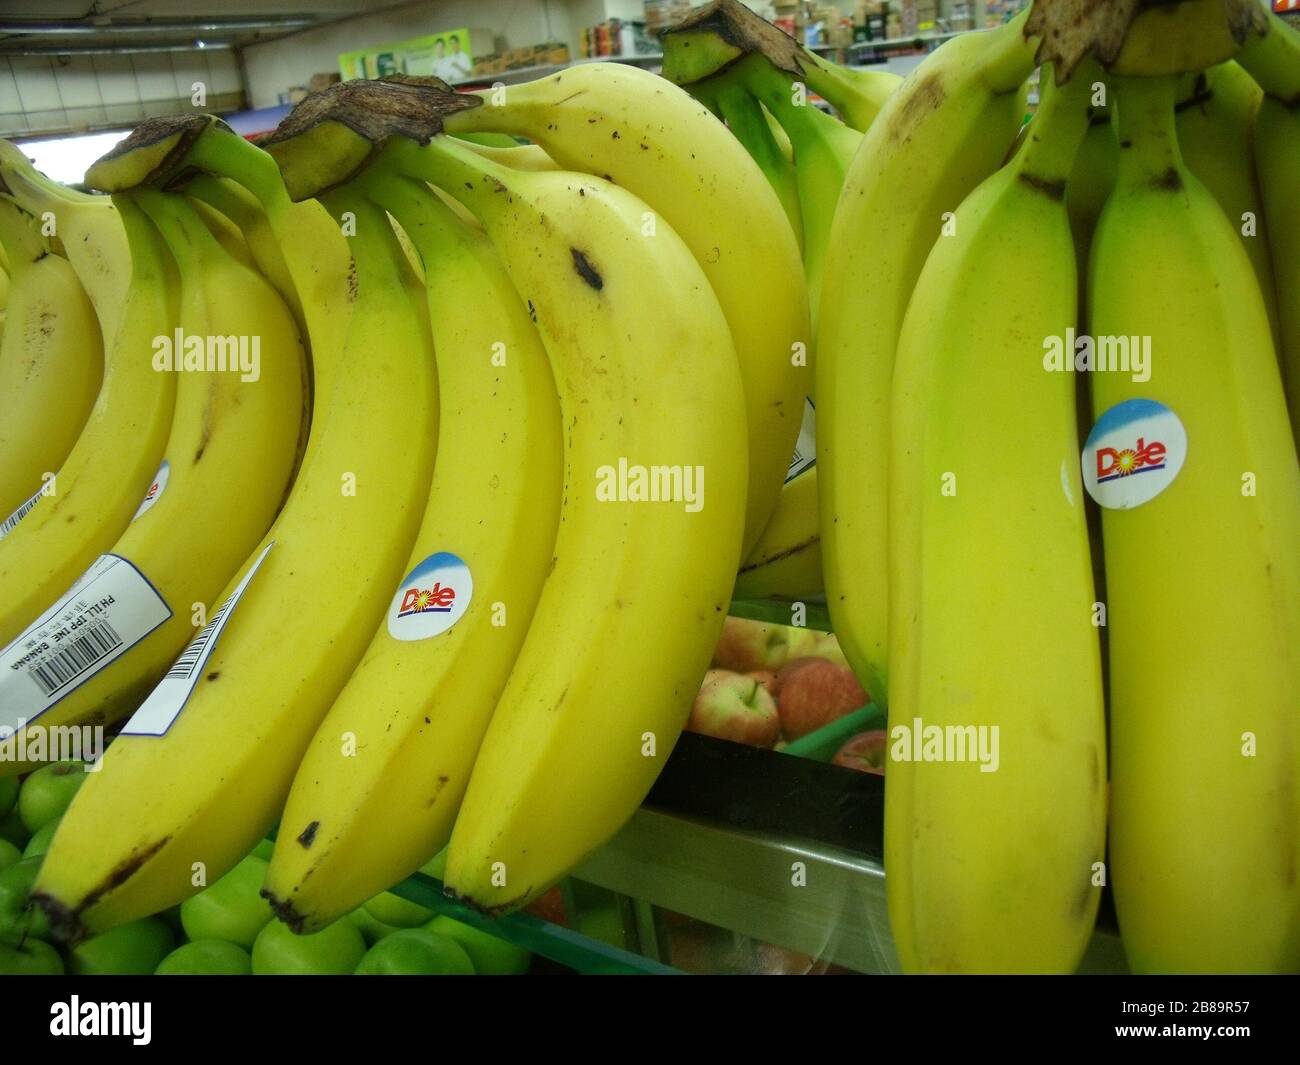 Supermercado singapur fotografías e imágenes de alta resolución - Alamy